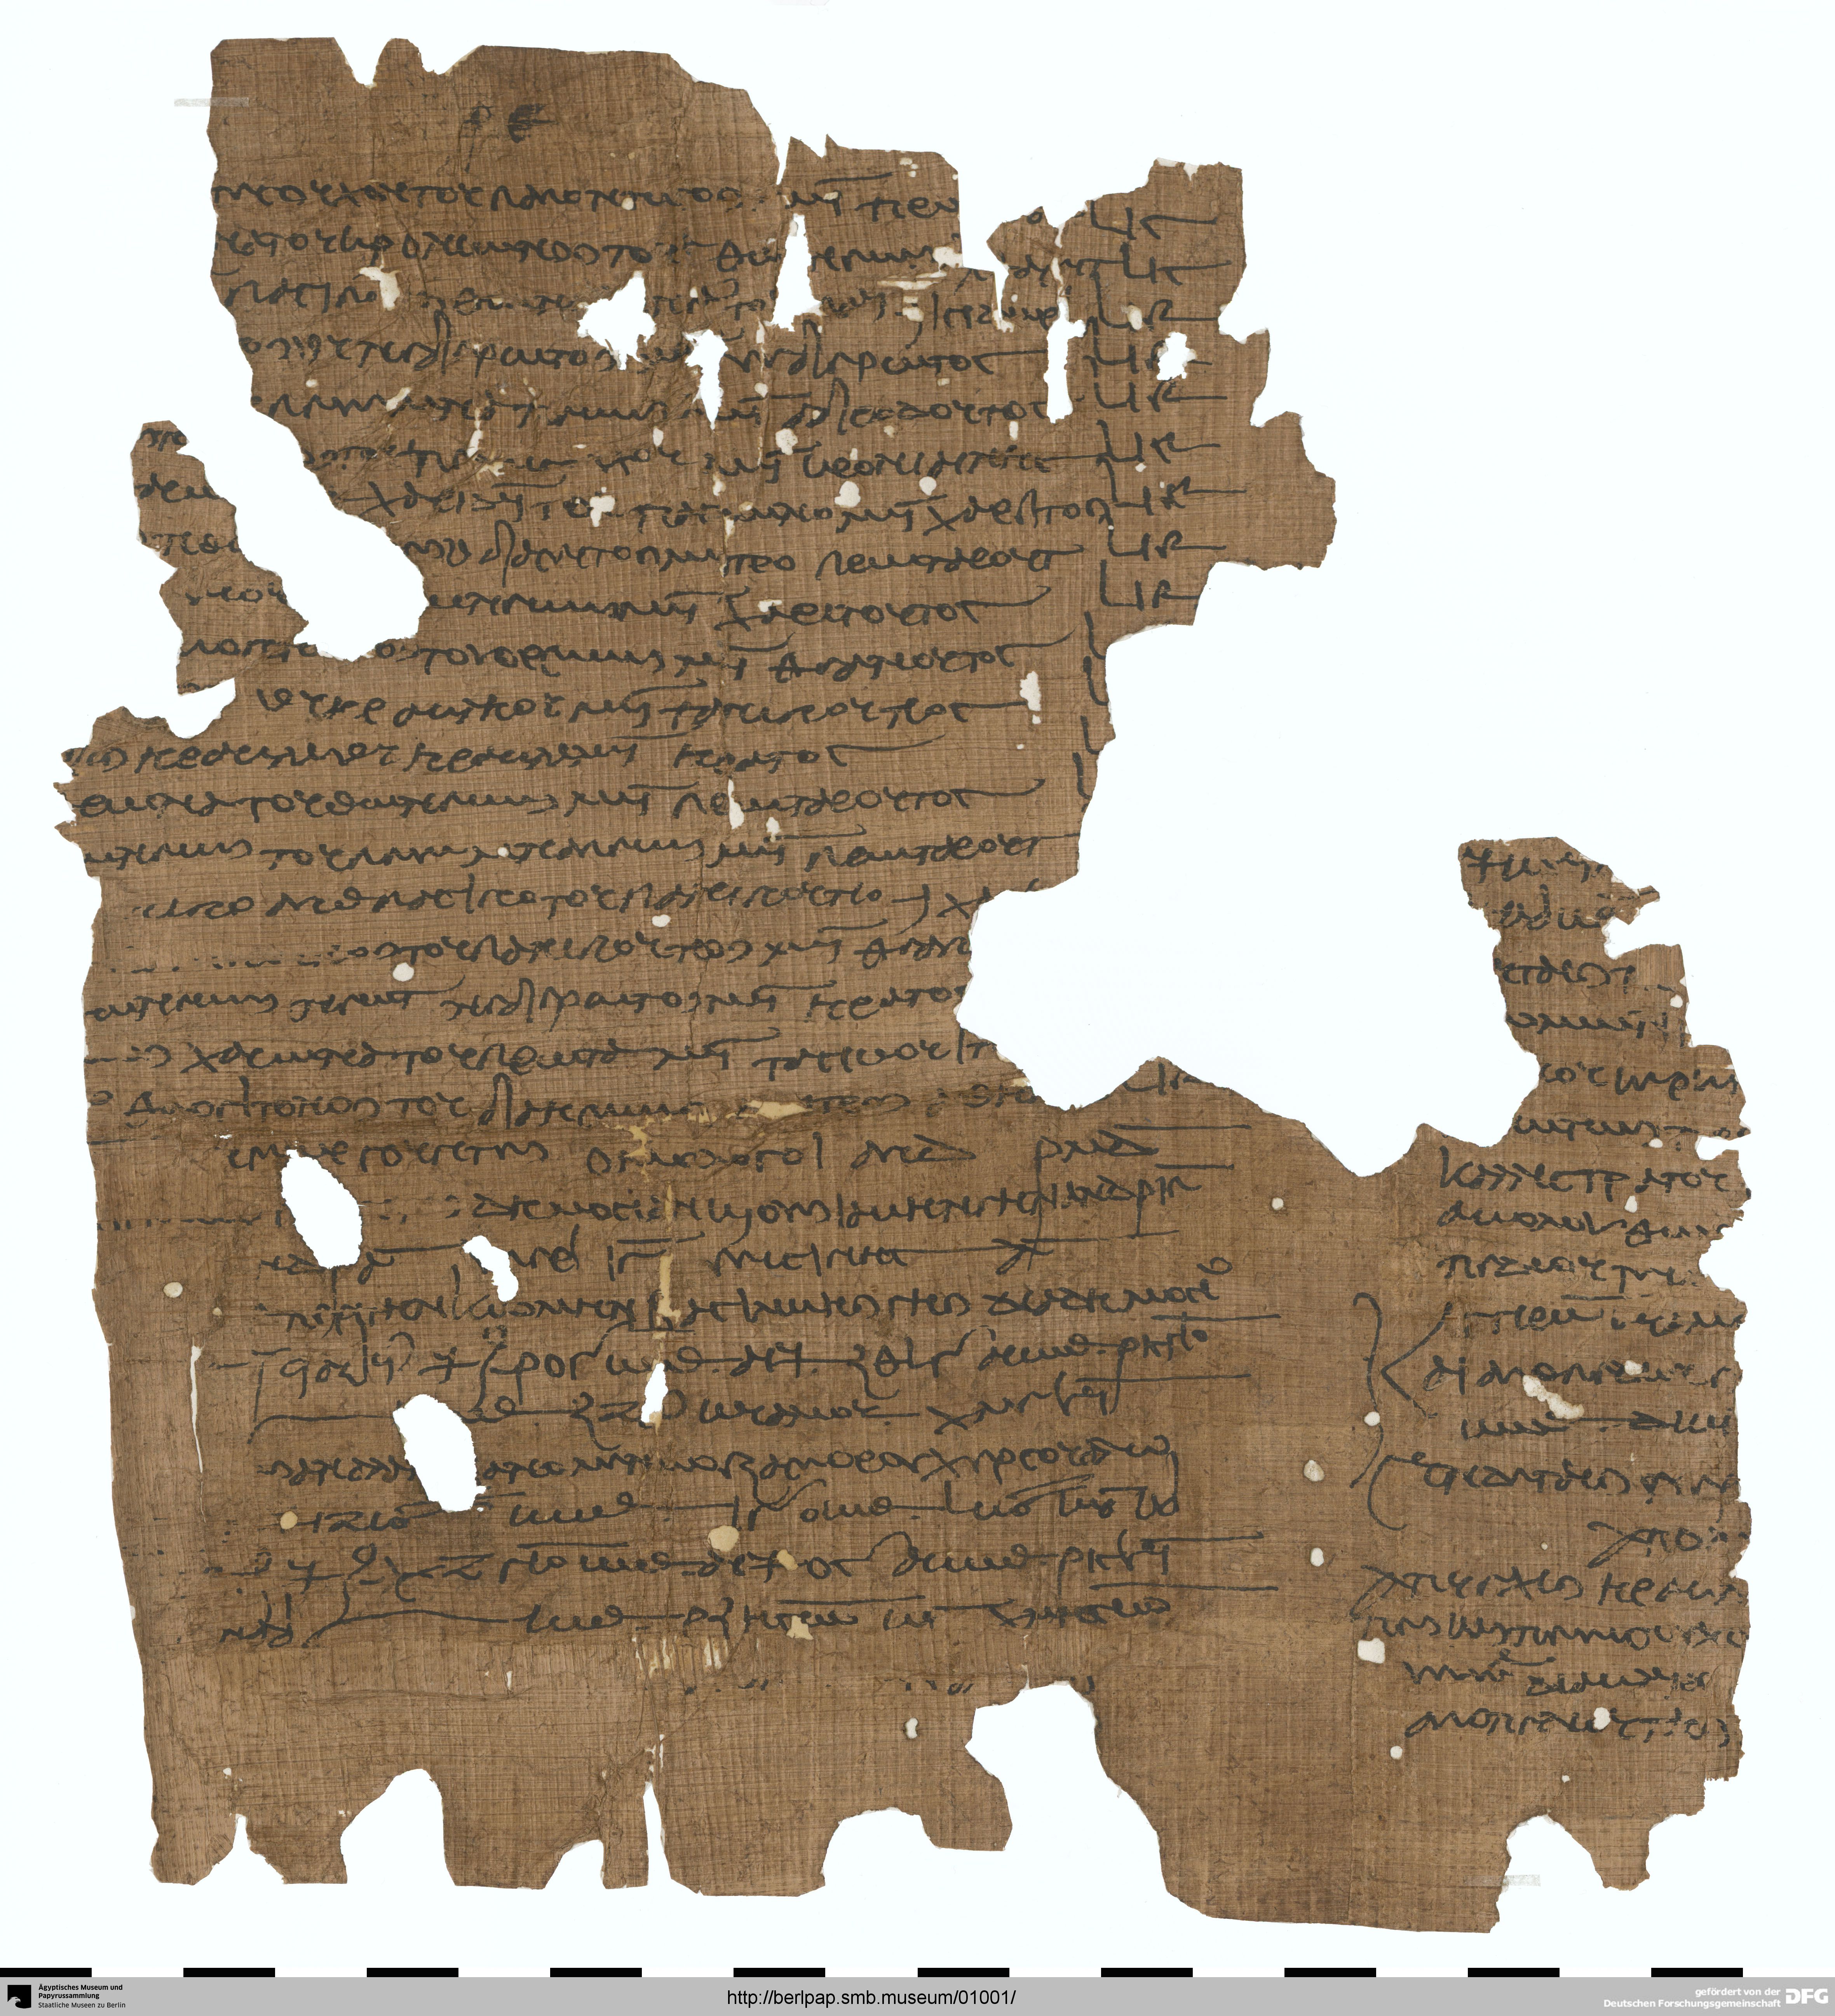 https://berlpap.smb.museum/Original/P_02292_R_001.jpg (Ägyptisches Museum und Papyrussammlung, Staatliche Museen zu Berlin CC BY-NC-SA)